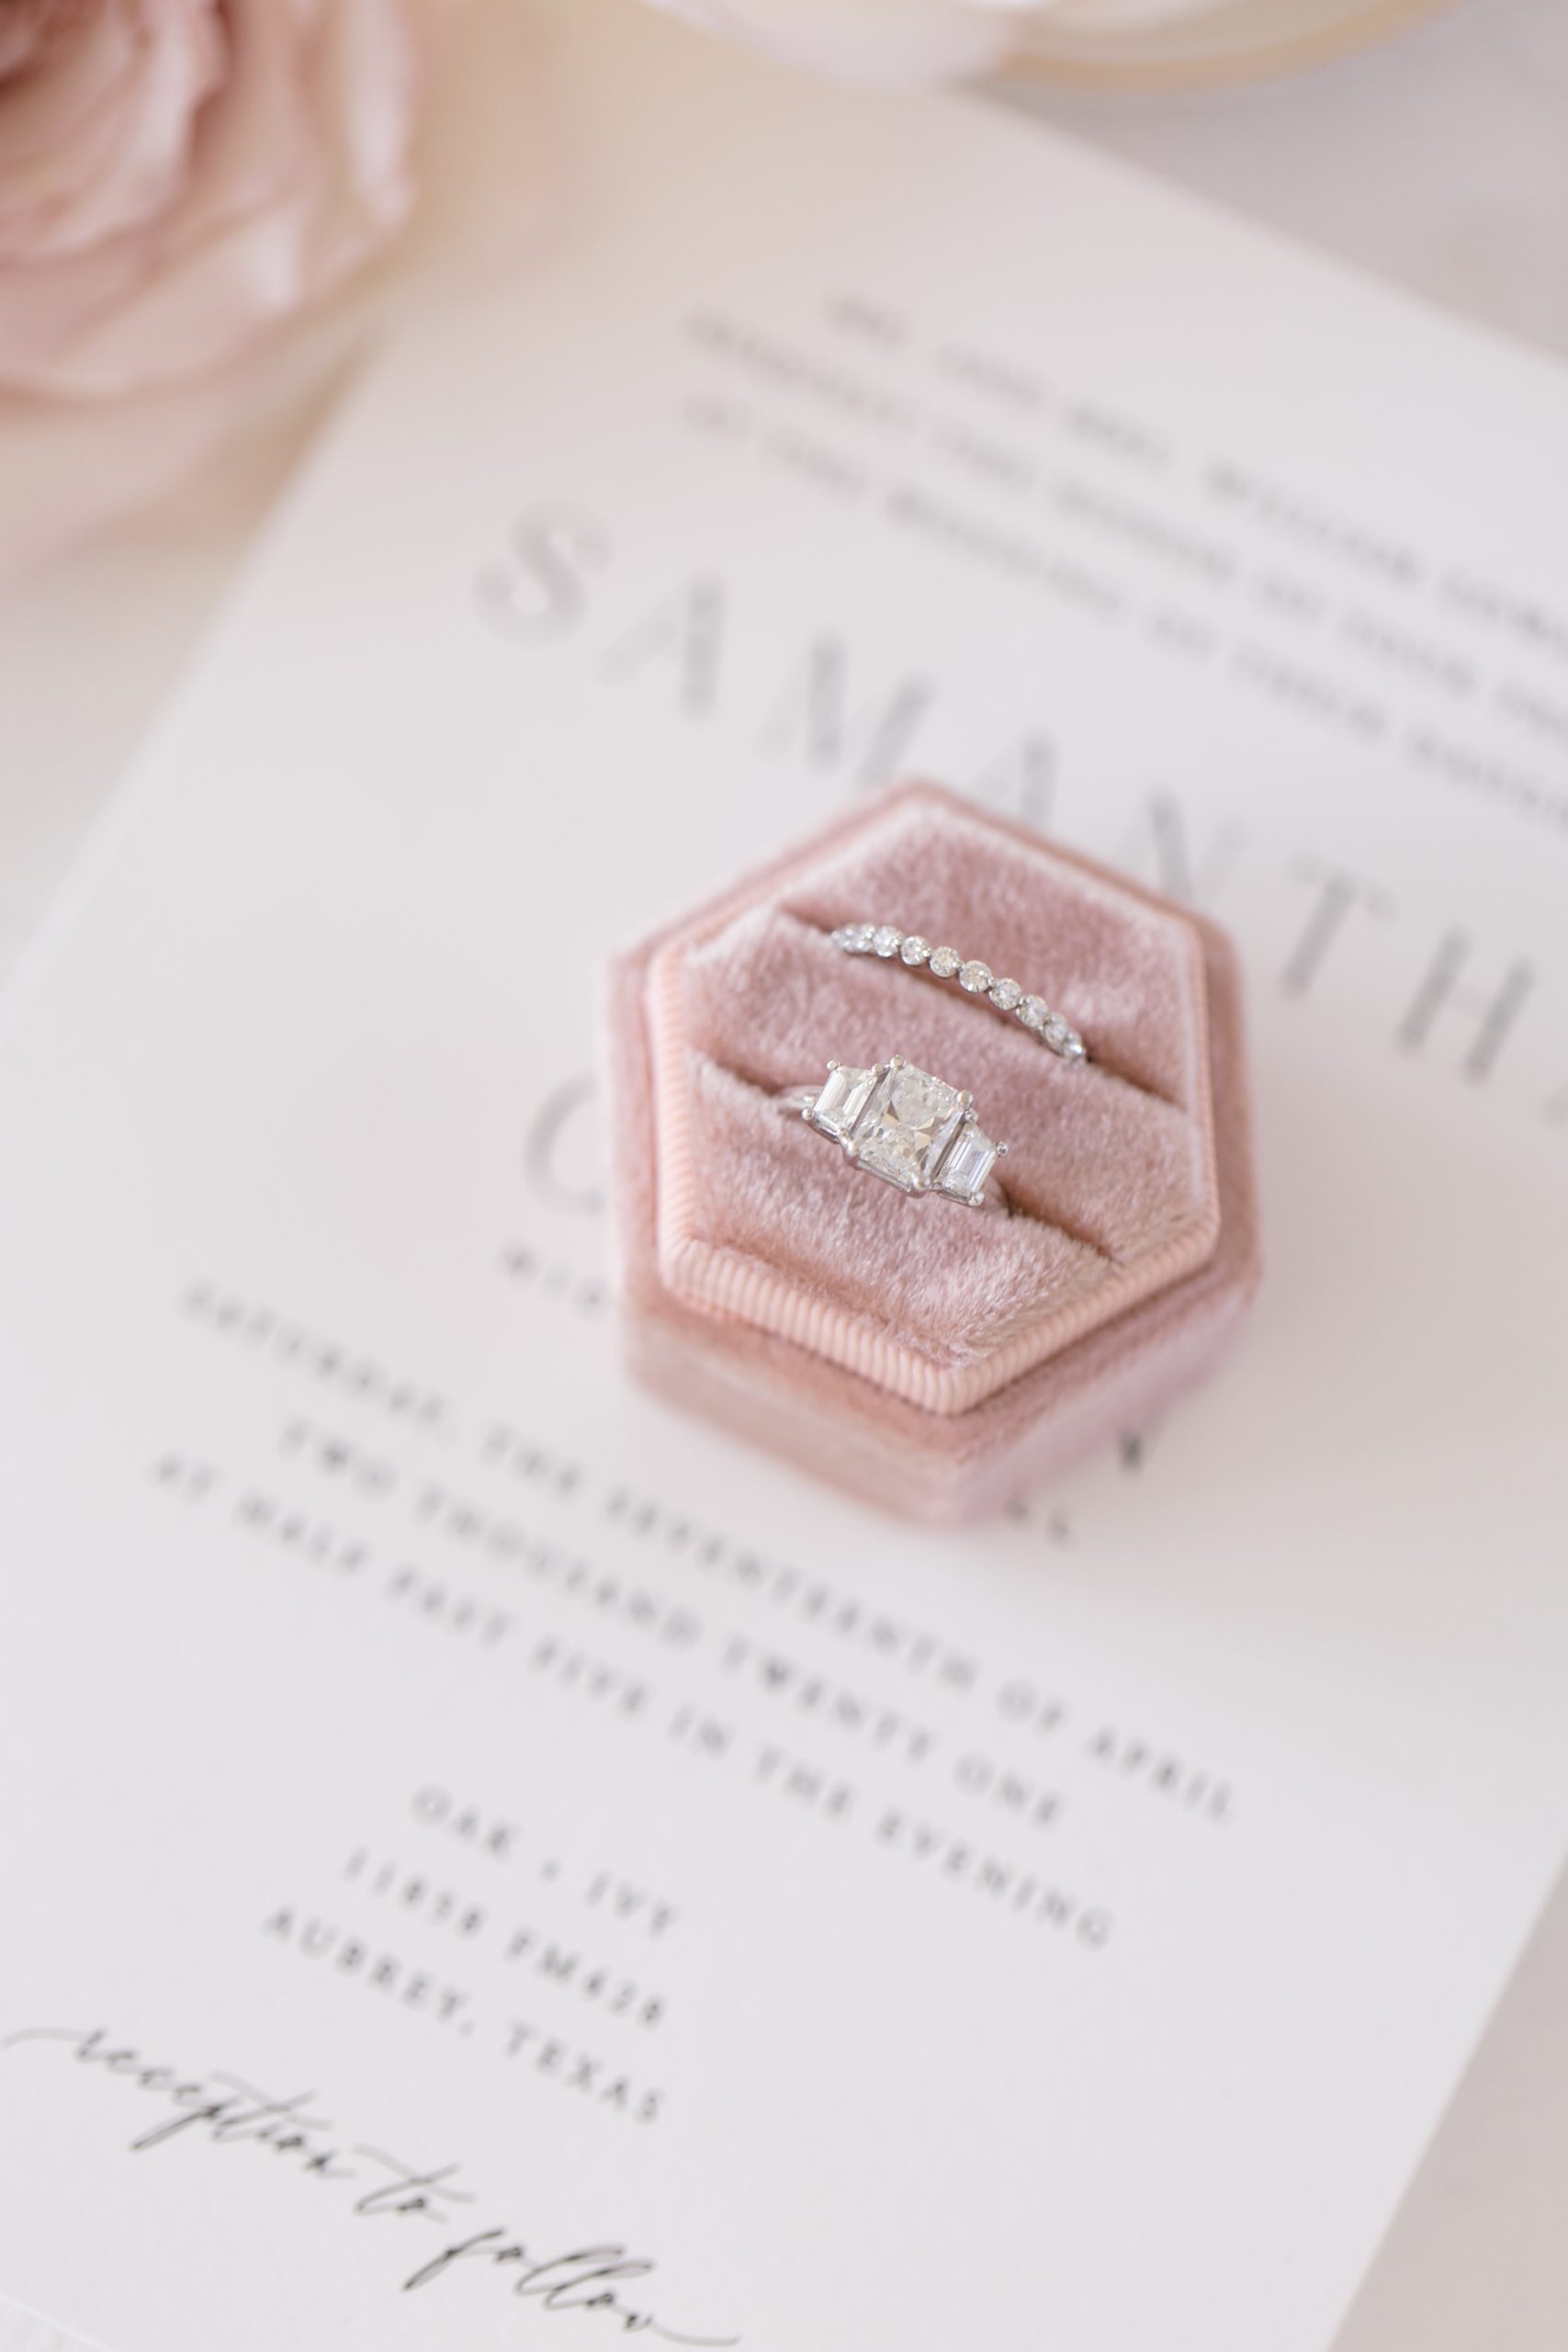 wedding ring rests in pastel pink ring box